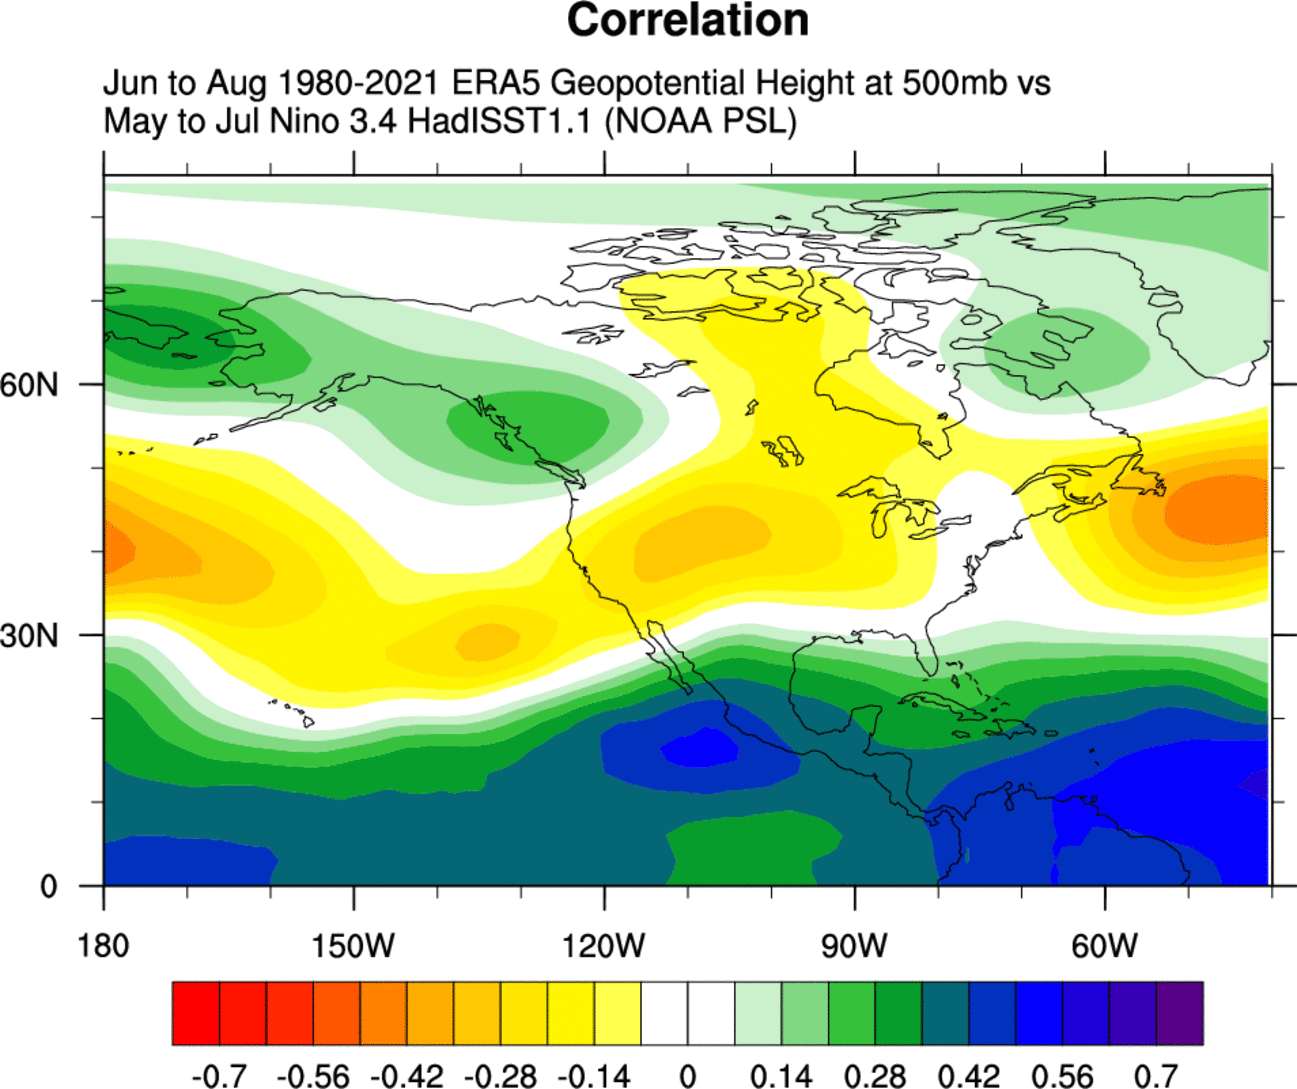 warm-season-weather-enso-pressure-anomaly-historical-pattern-analysis